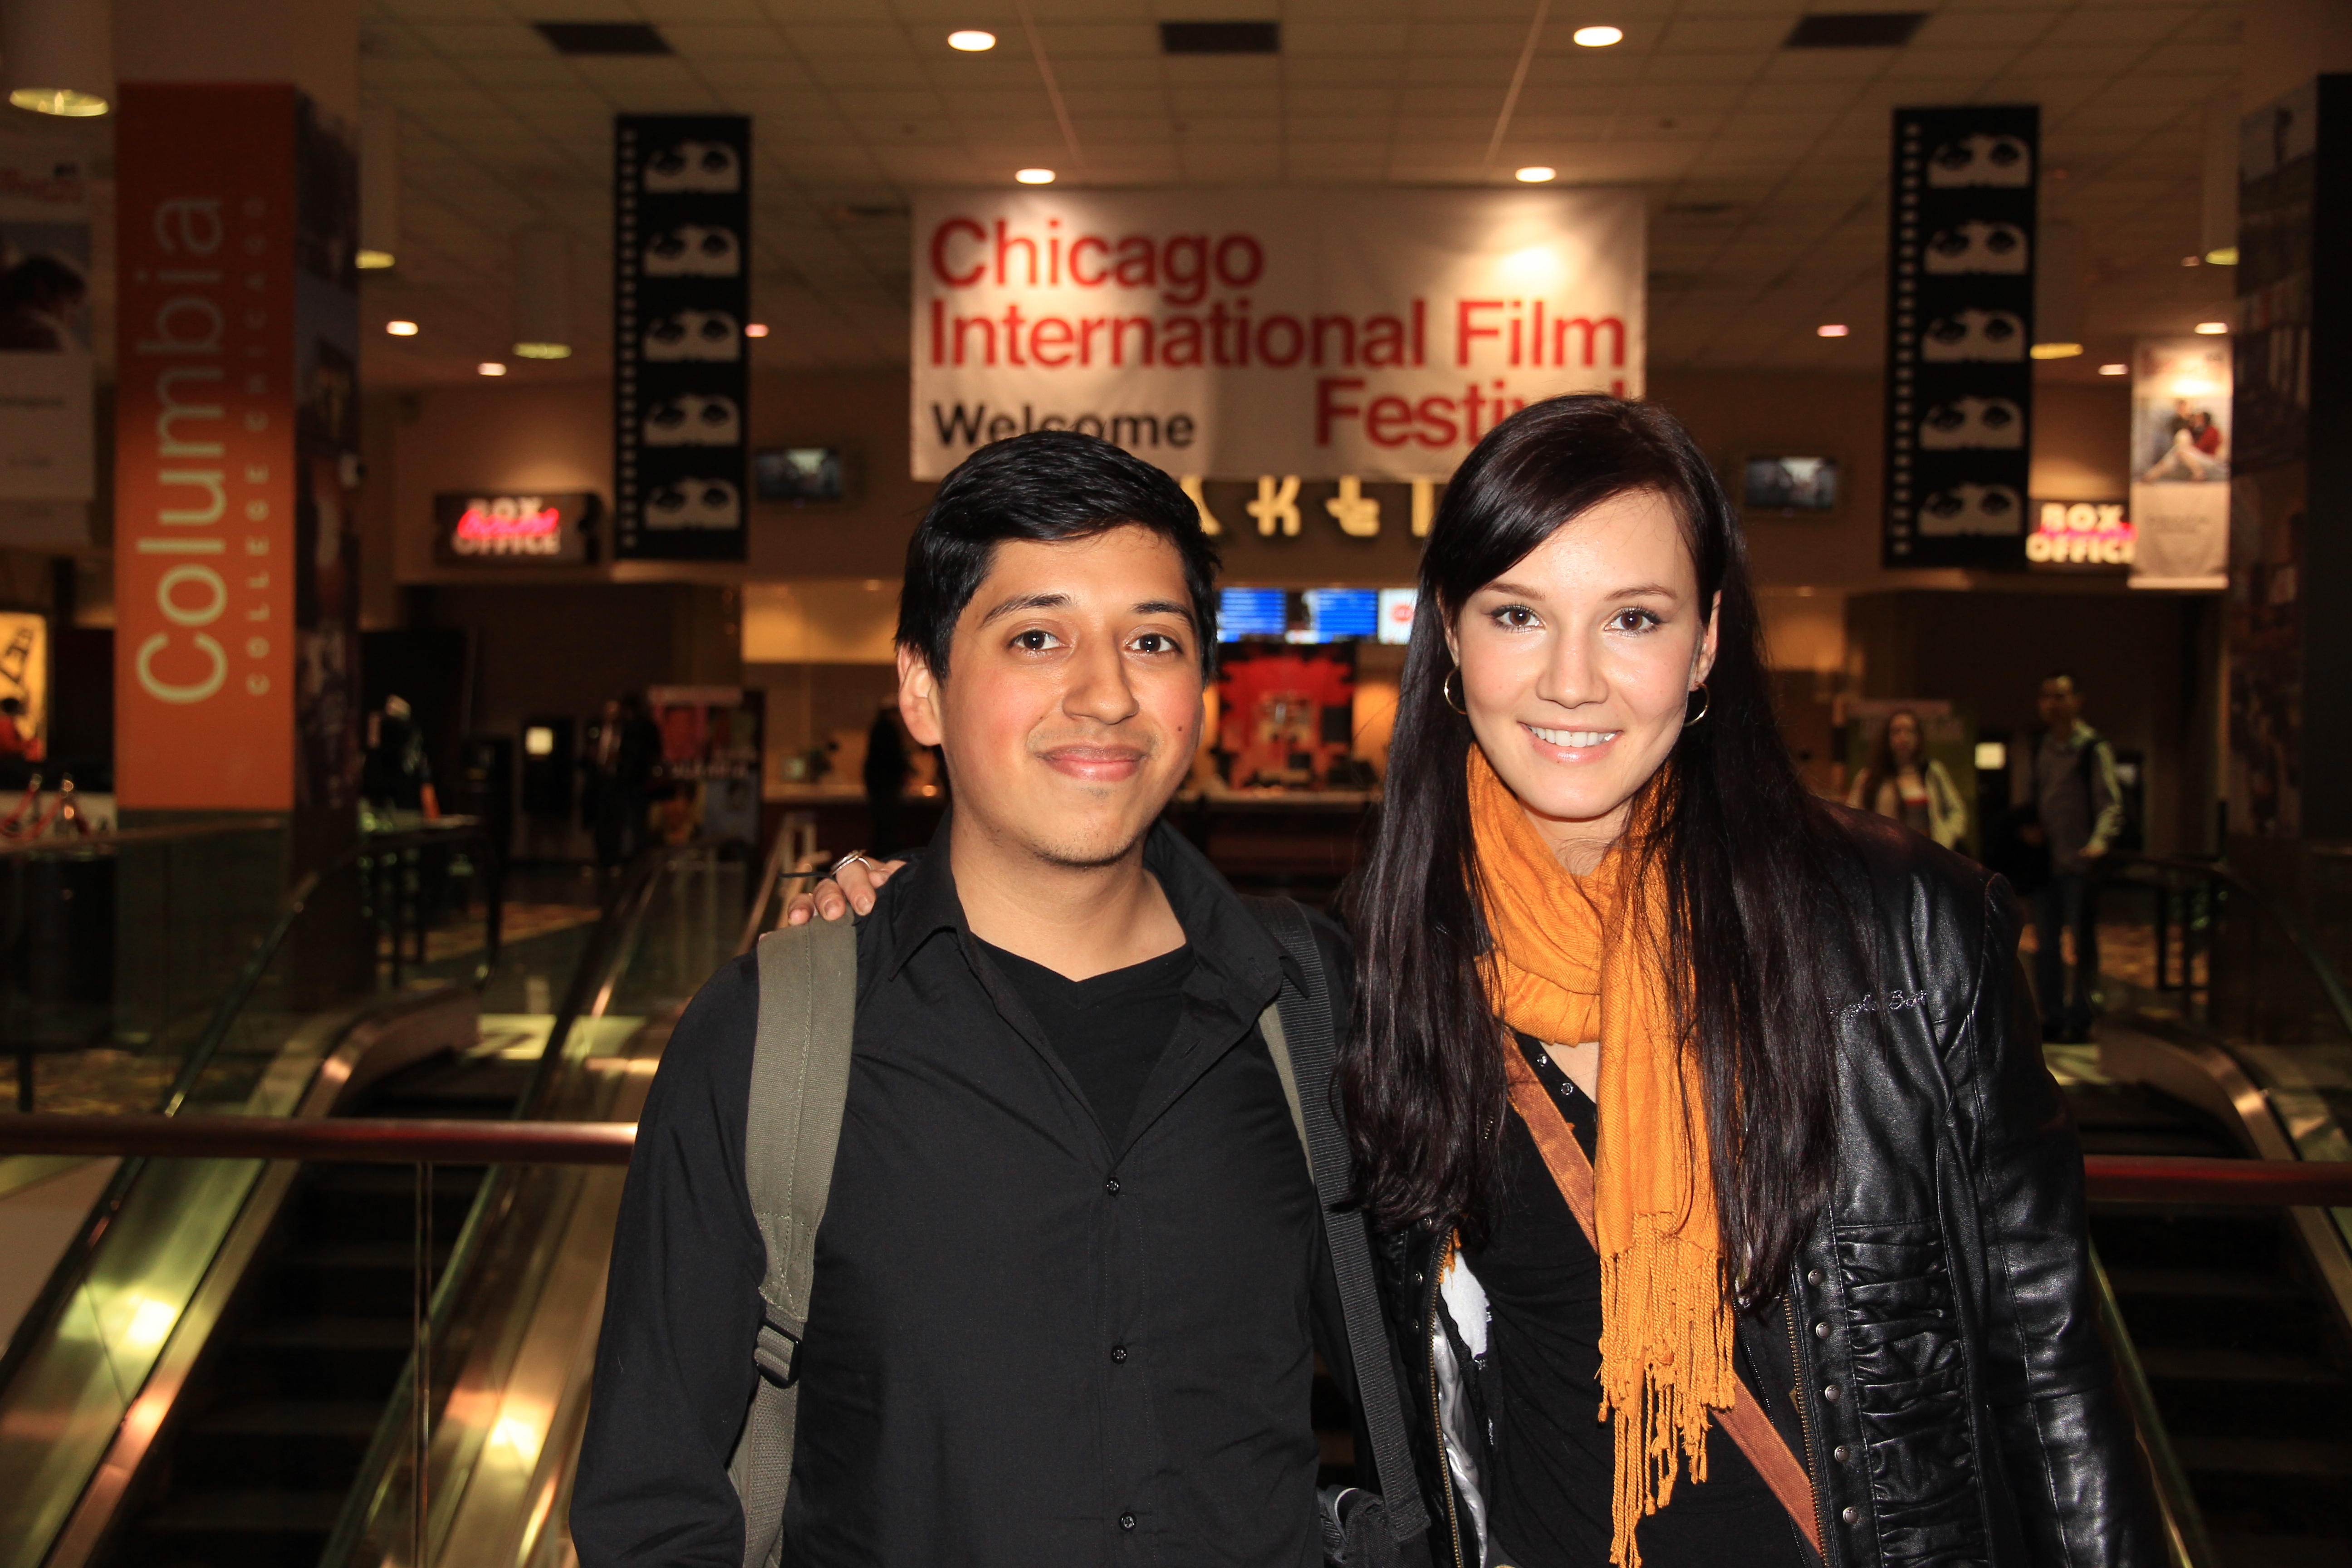 Danny Agama with Yana Kirichkova at the Chicago International Film Festival in 2012.